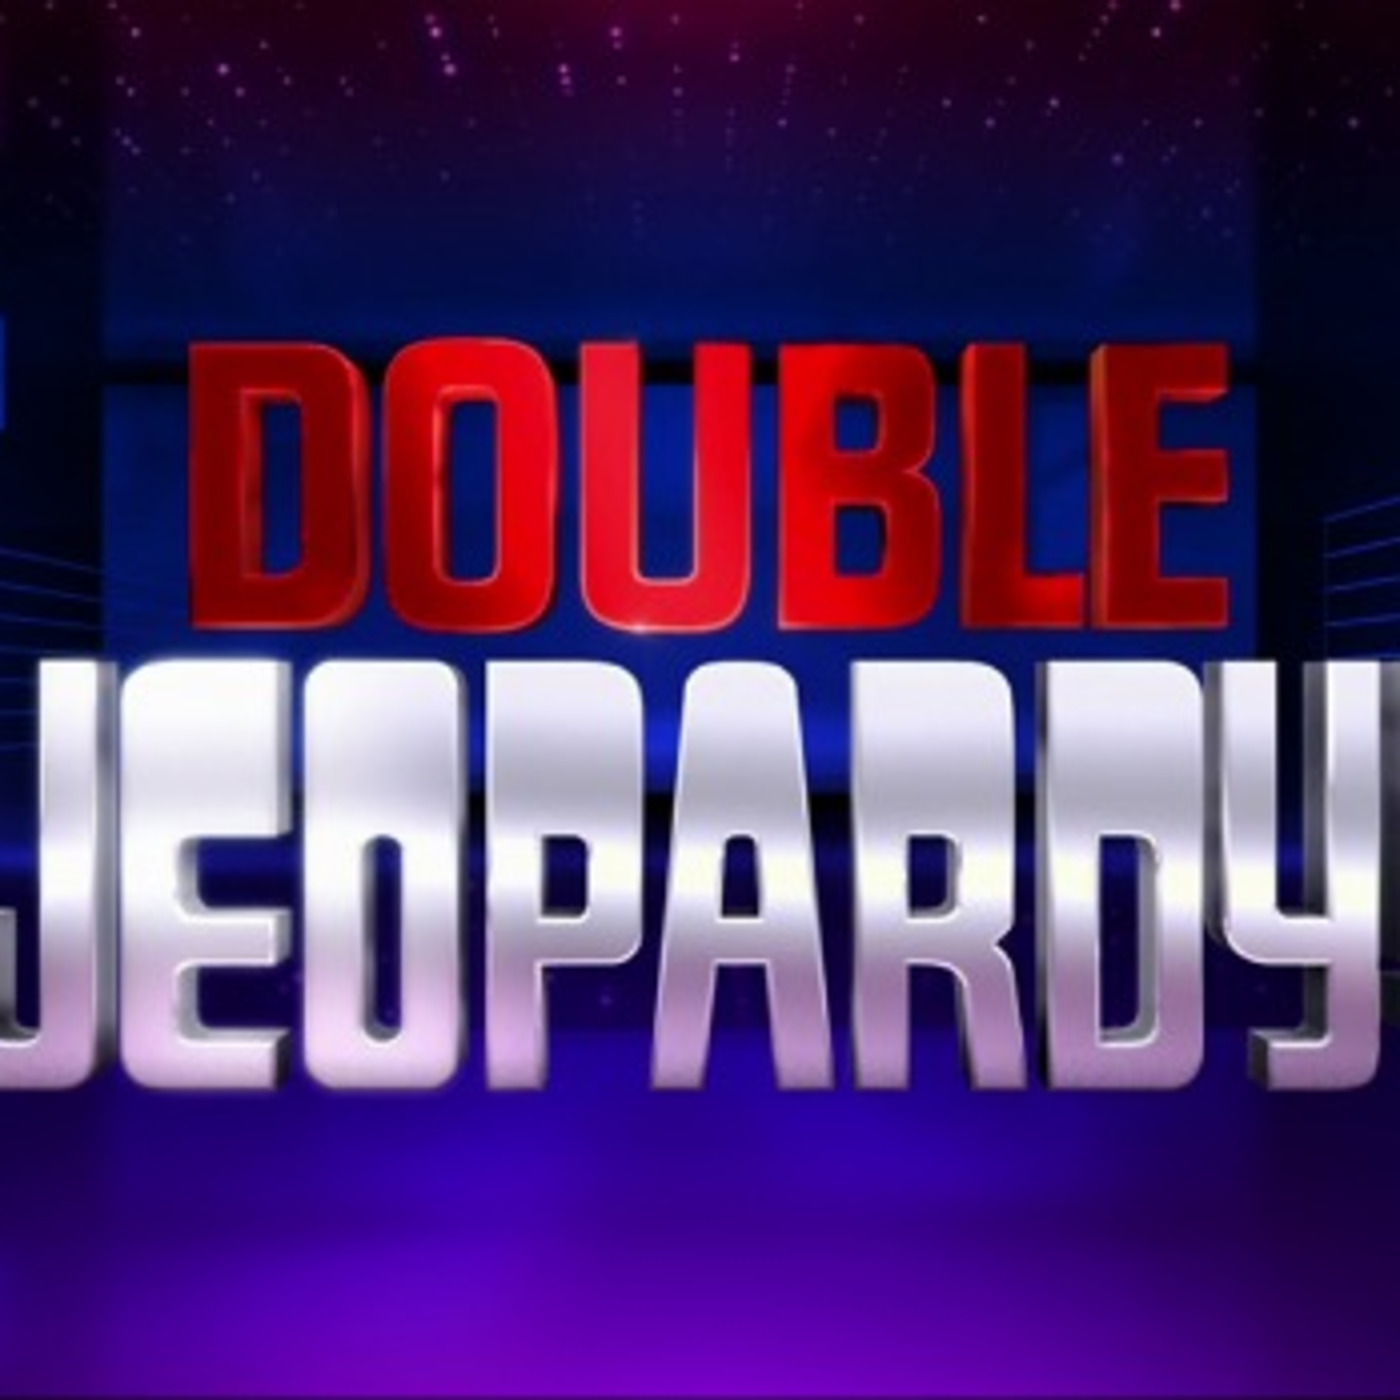 Double Jeopardy